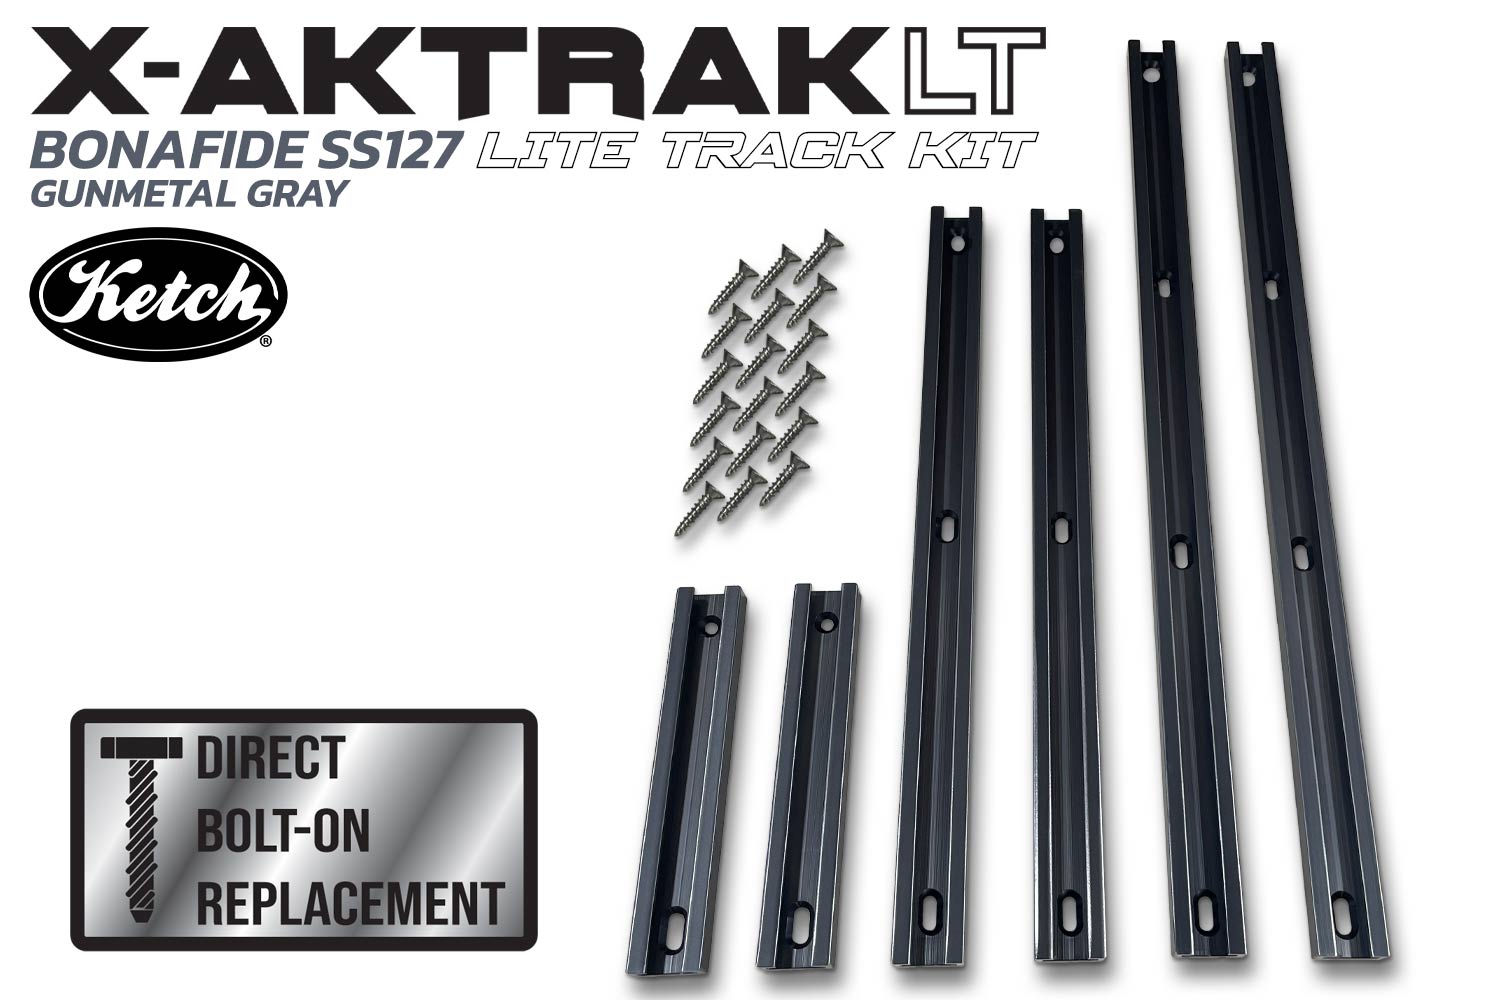 Full replacement kit of Ketch X-Aktrak lite for the Bonafide SS127 in the Gunmetal Gray color aluminum t-tracks.